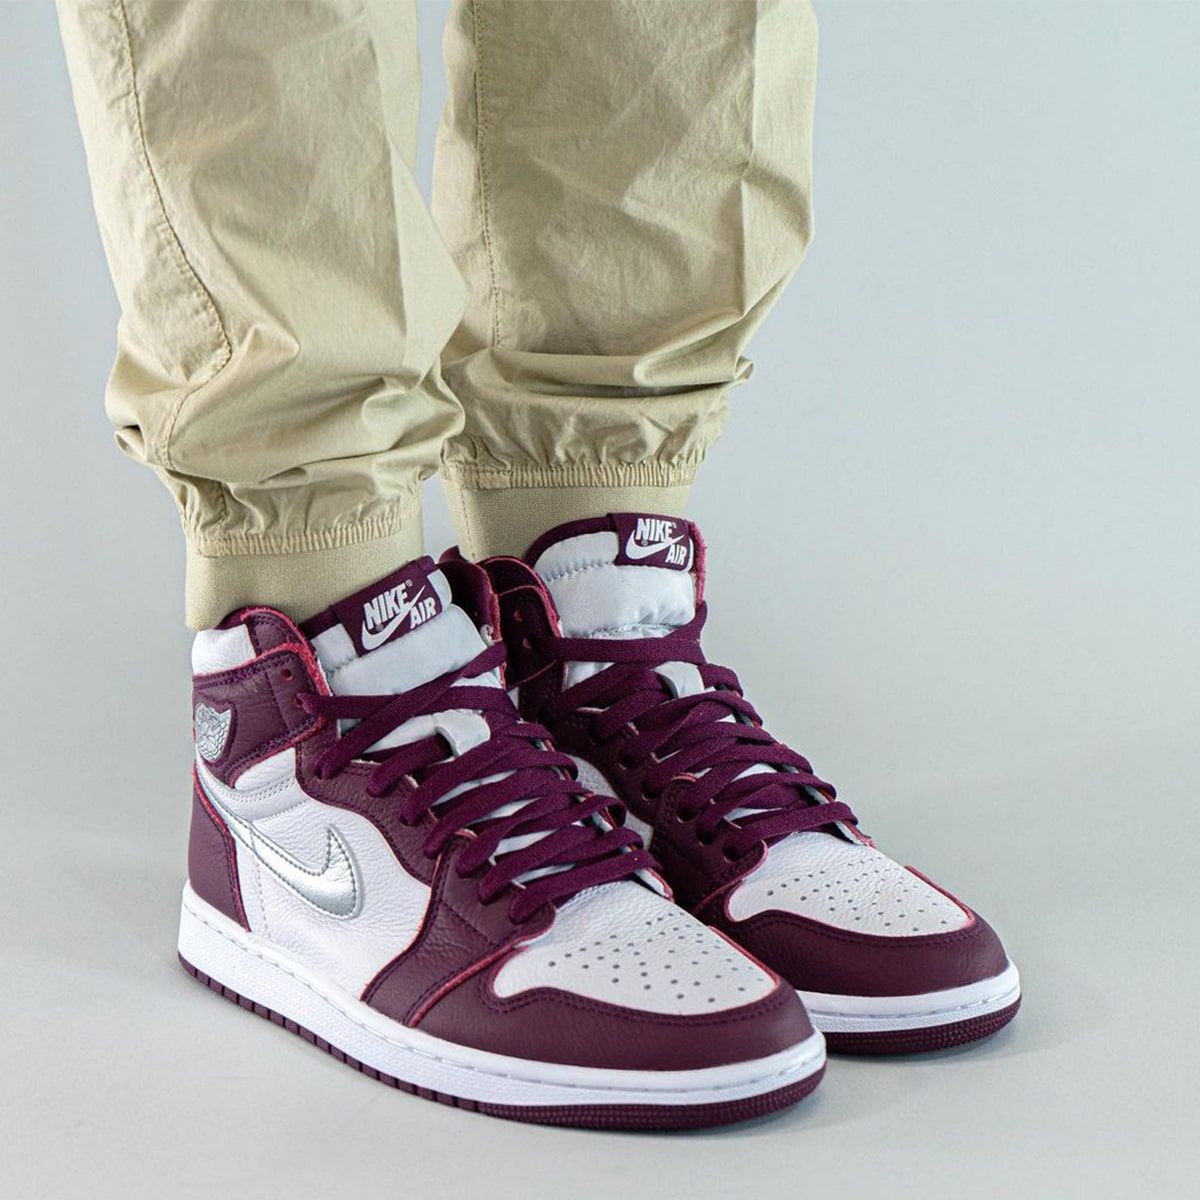 On-Foot Looks // Air Jordan 1 High 